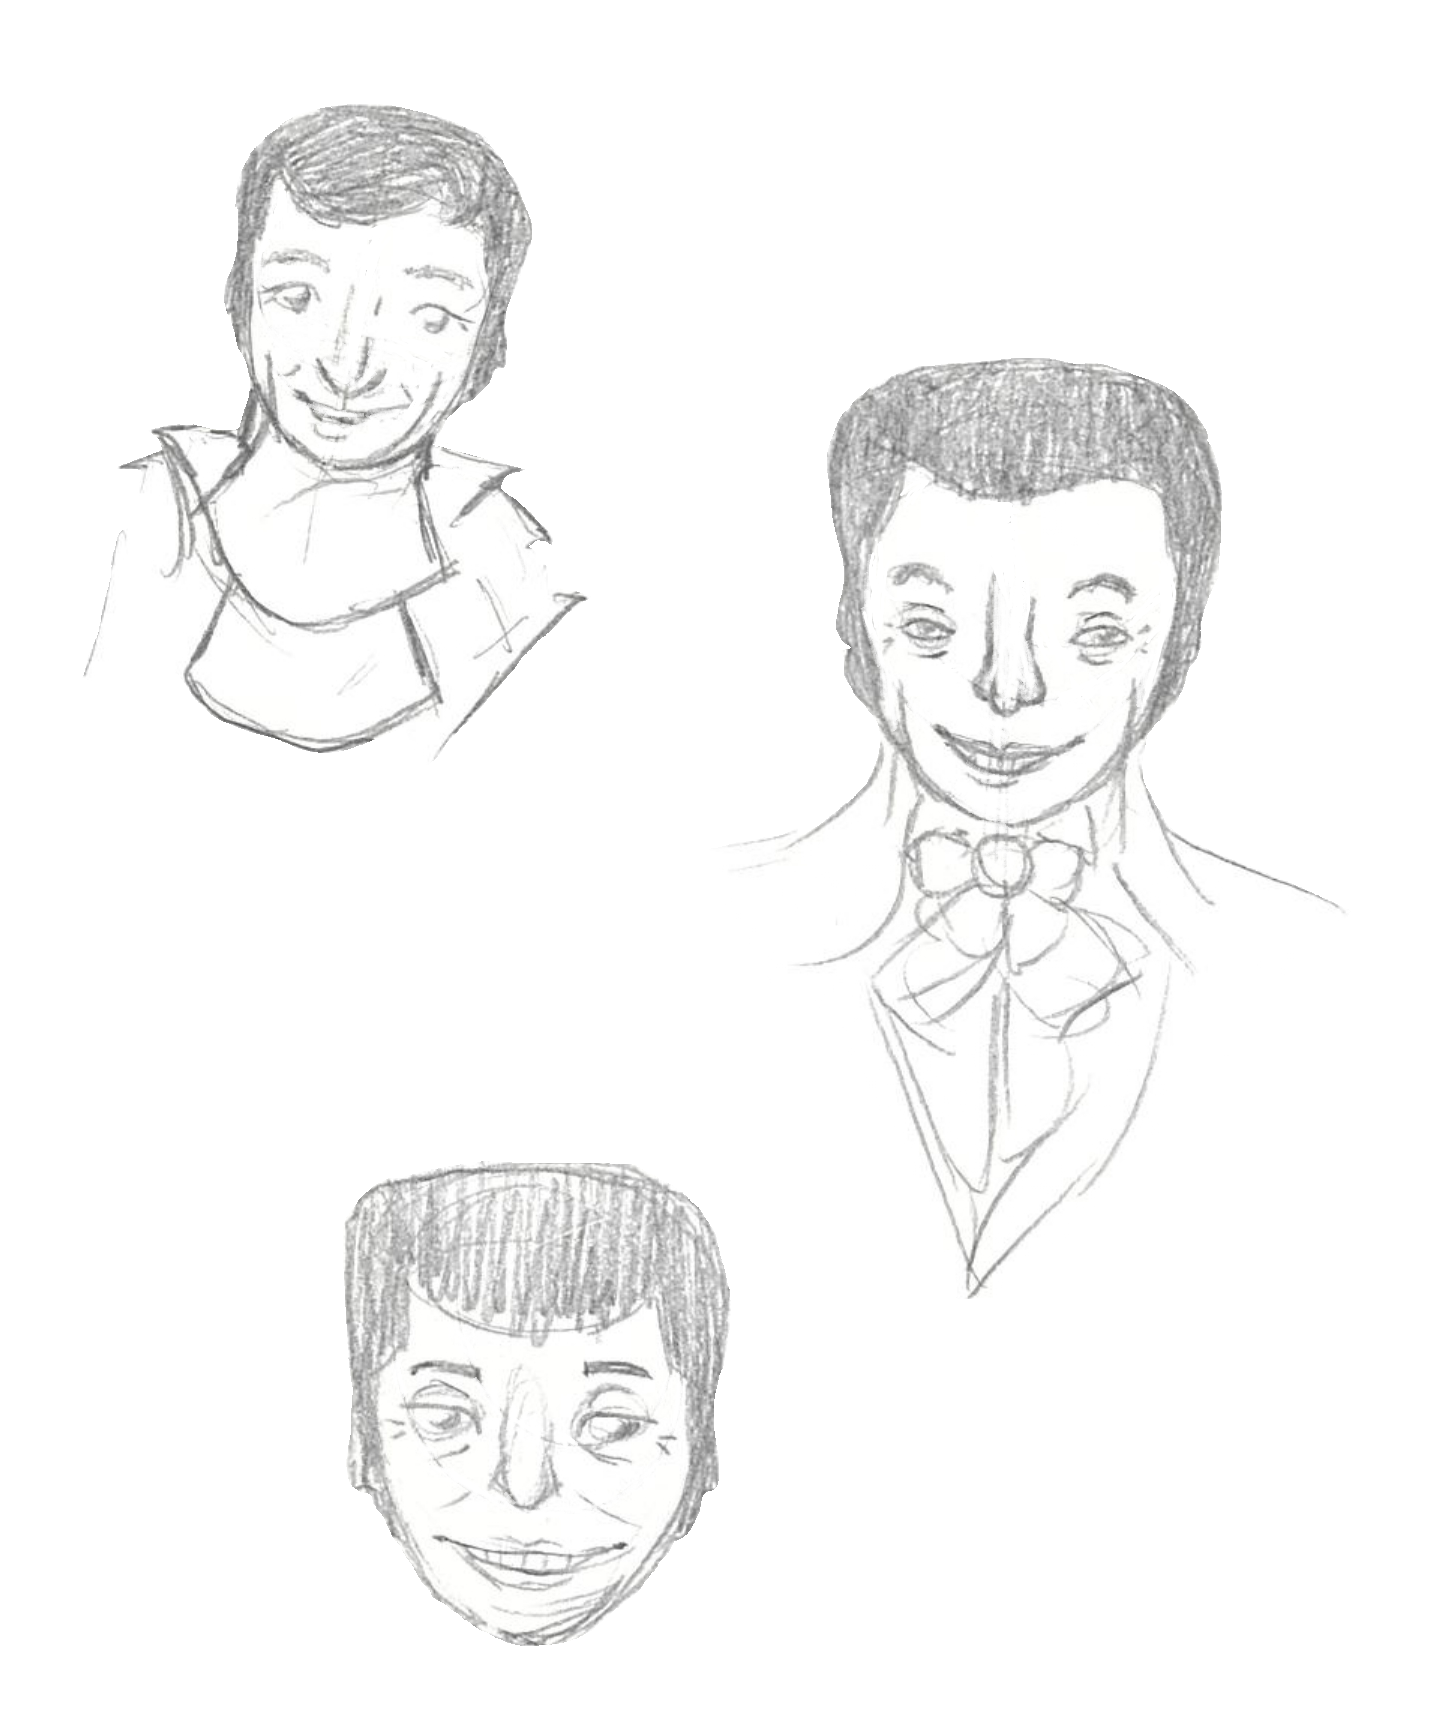 Three drawings of Liberace